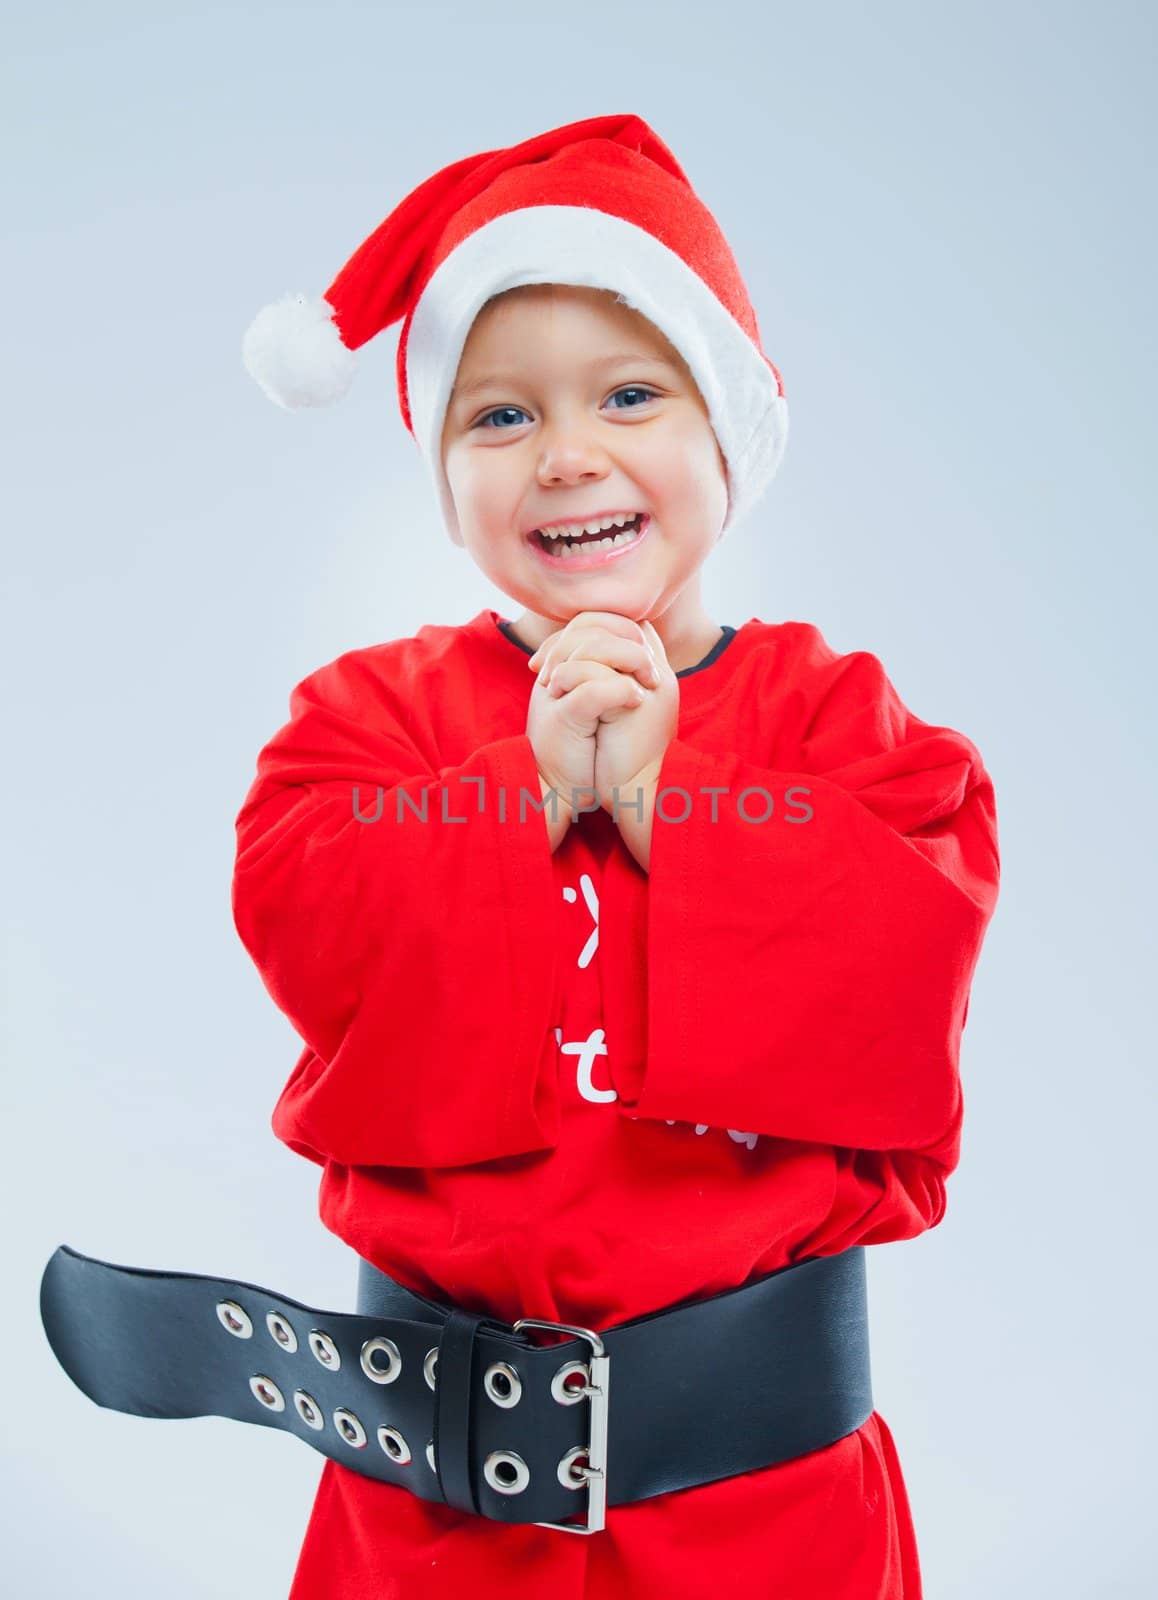 Surprised baby boy in santa claus hat